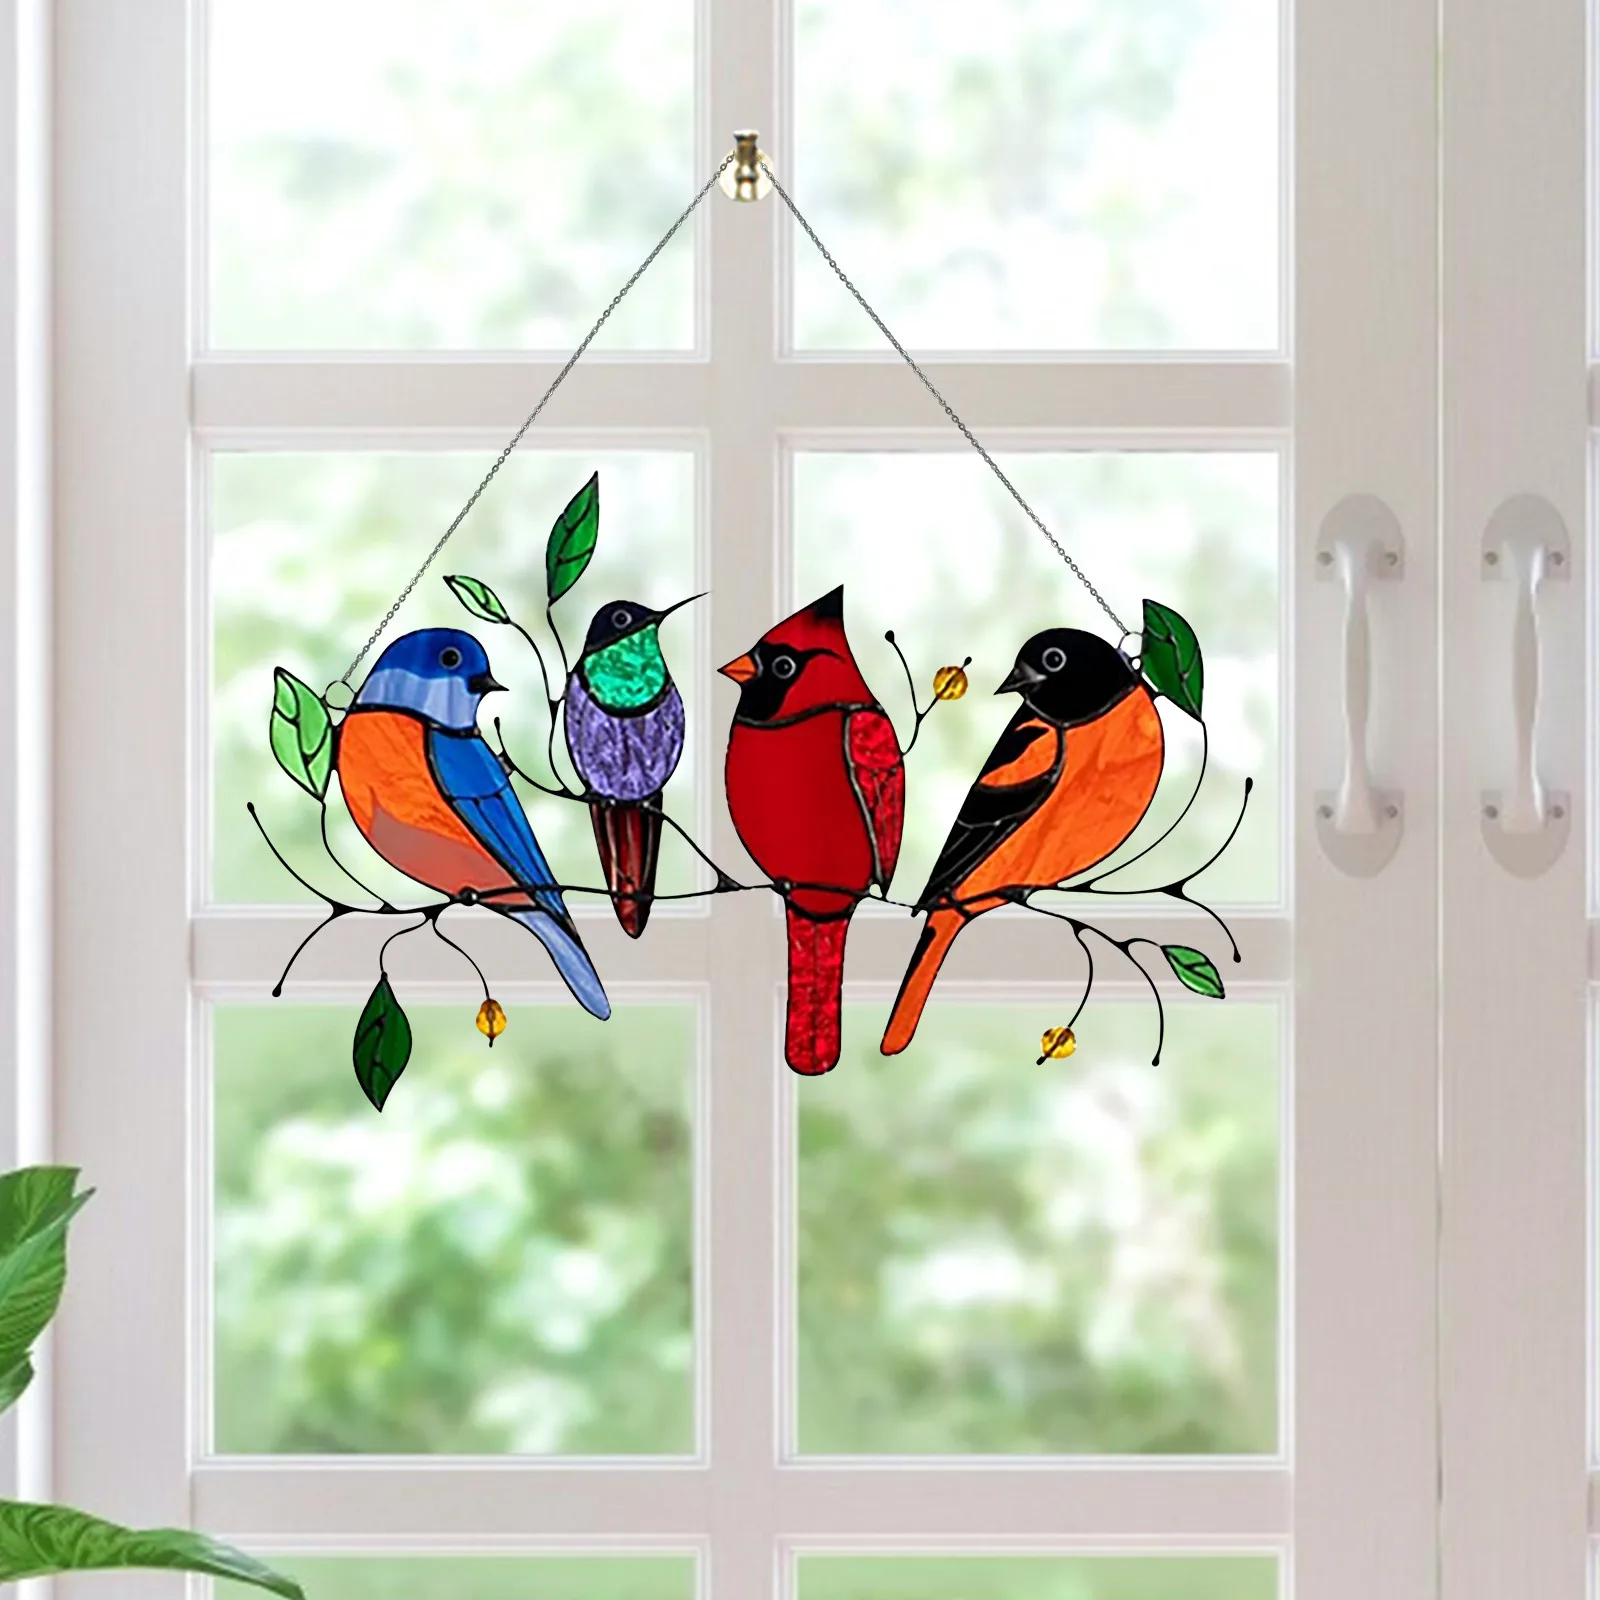 Multicolor Stained Glass Birds-On-A-Wire Window Panel Suncatcher decor D8K5 